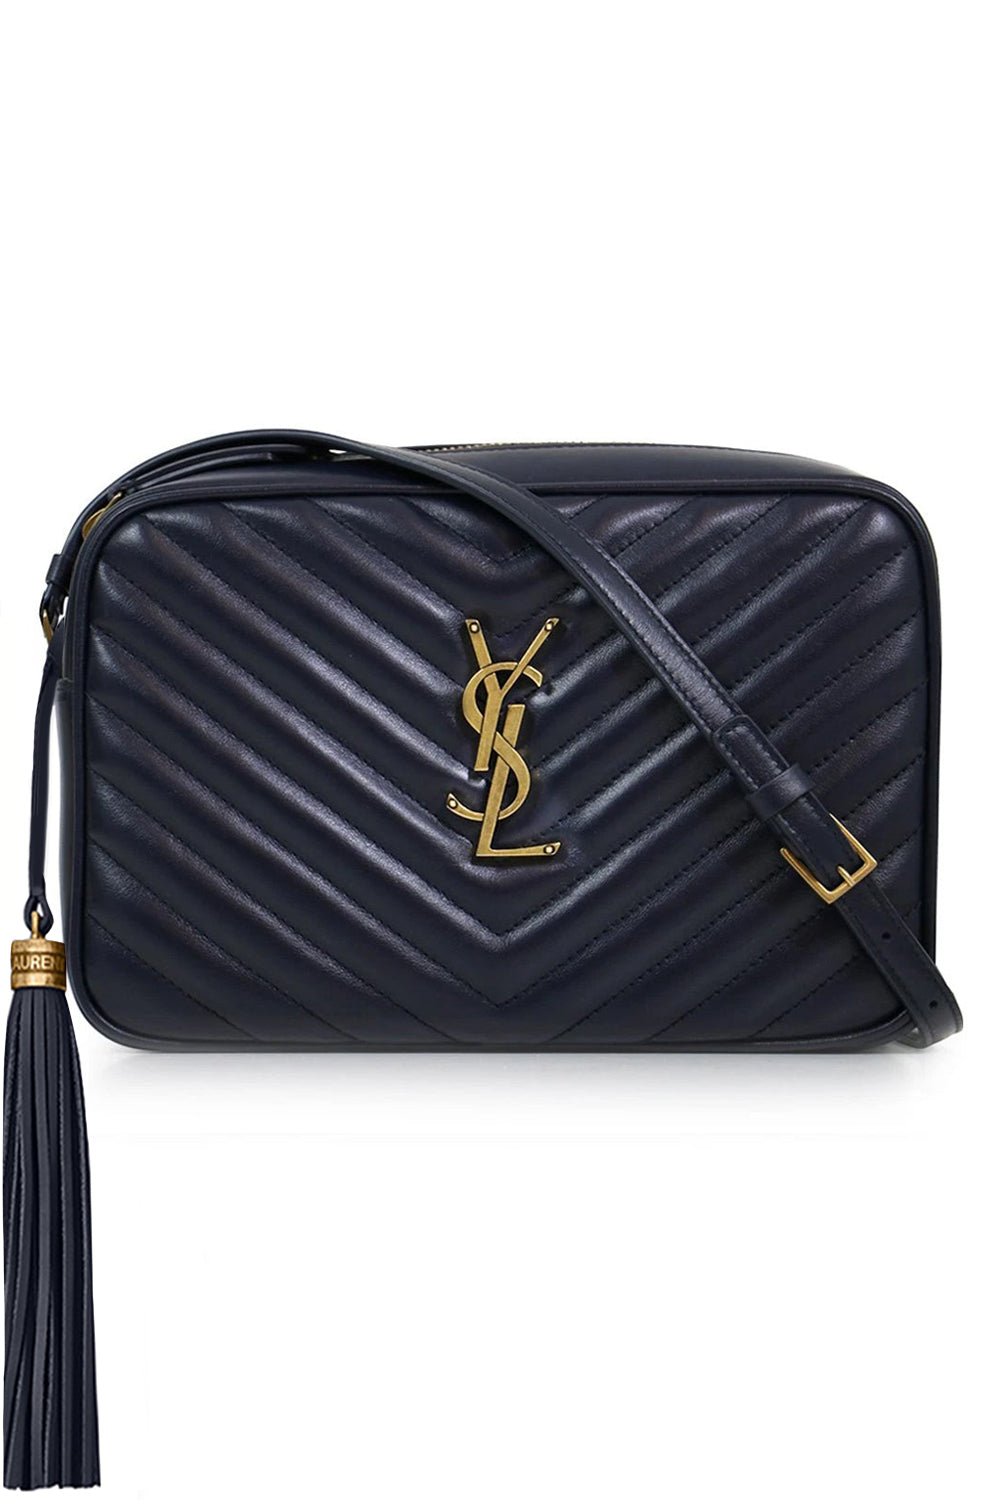 Yves Saint Laurent, Bags, Saint Laurent Camera Bag